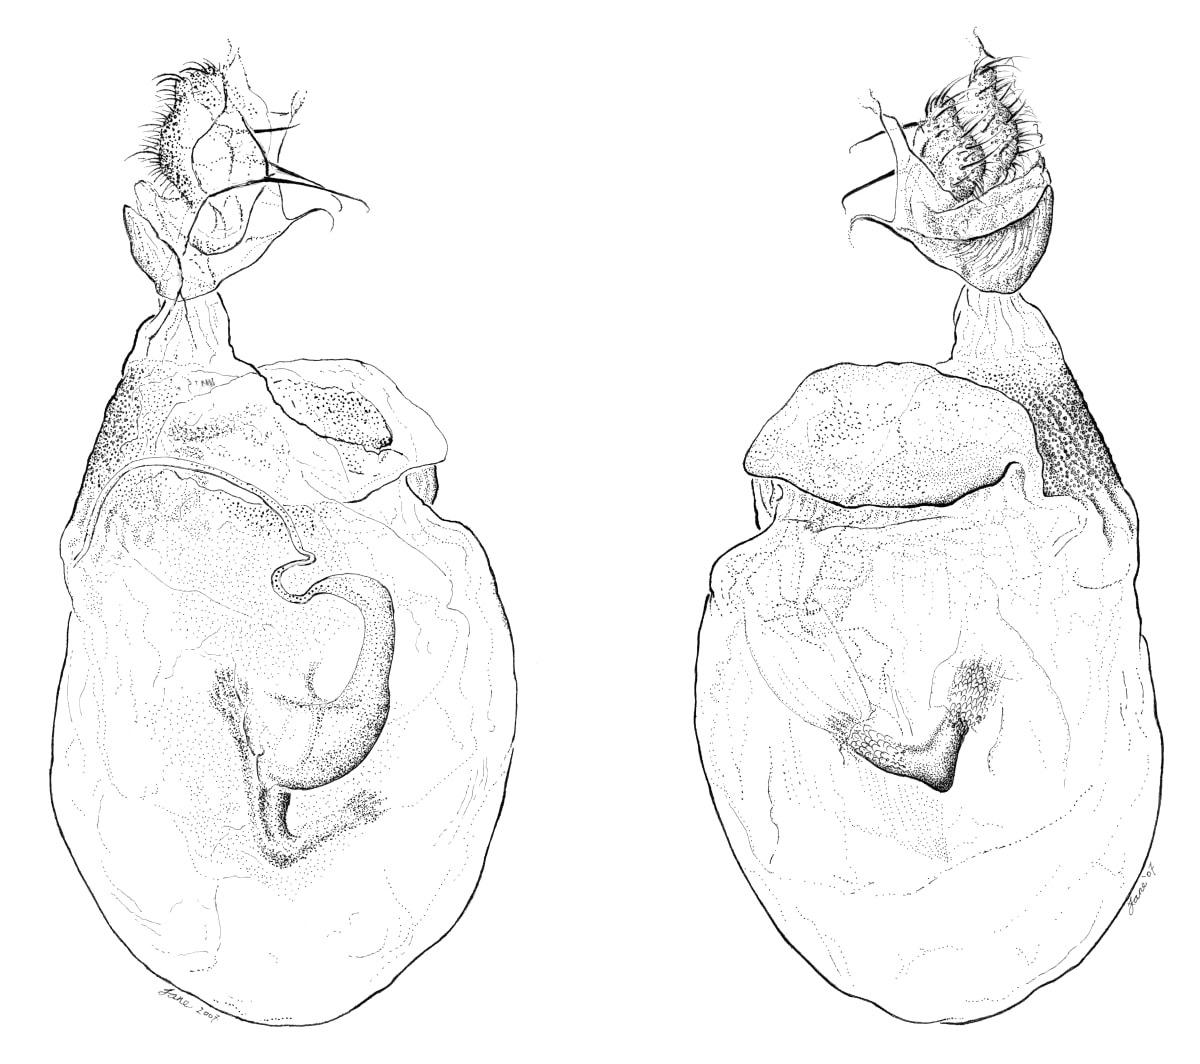 Cariba josia youngi female genitalia dorsal/ventral by Jane Hyland 